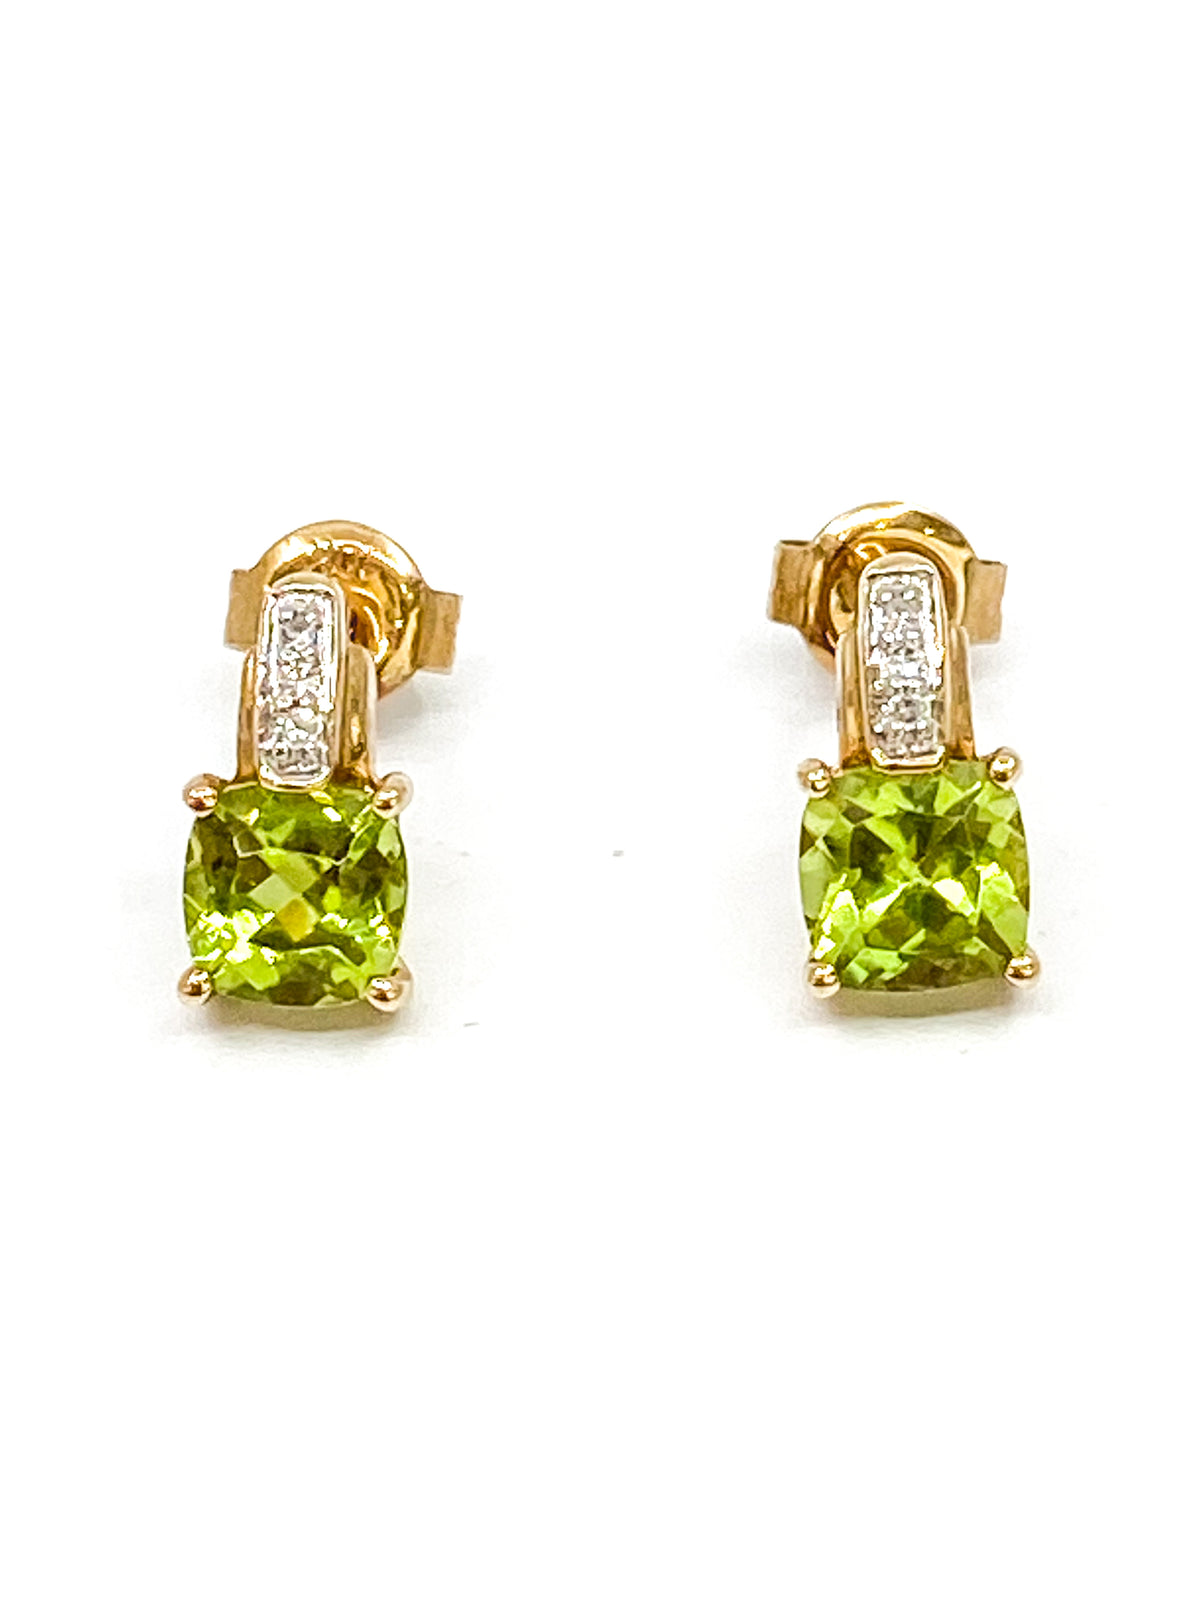 10K Yellow Gold 1.40cttw Genuine Peridot and 0.025cttw Diamond Earrings